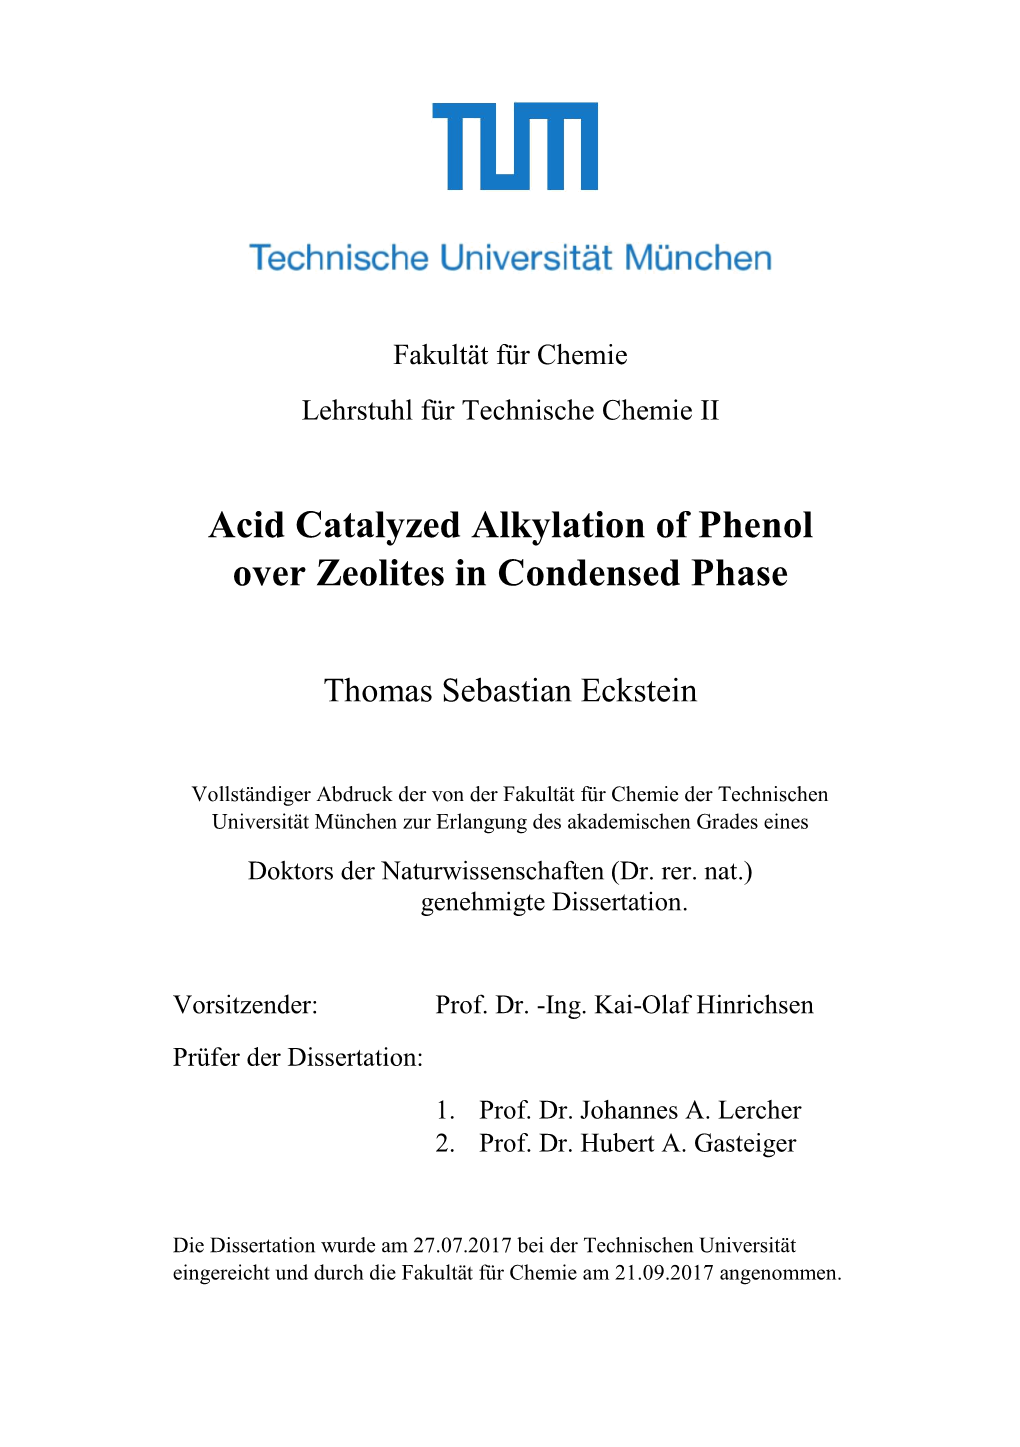 Acid Catalyzed Alkylation of Phenol Over Zeolites in Condensed Phase